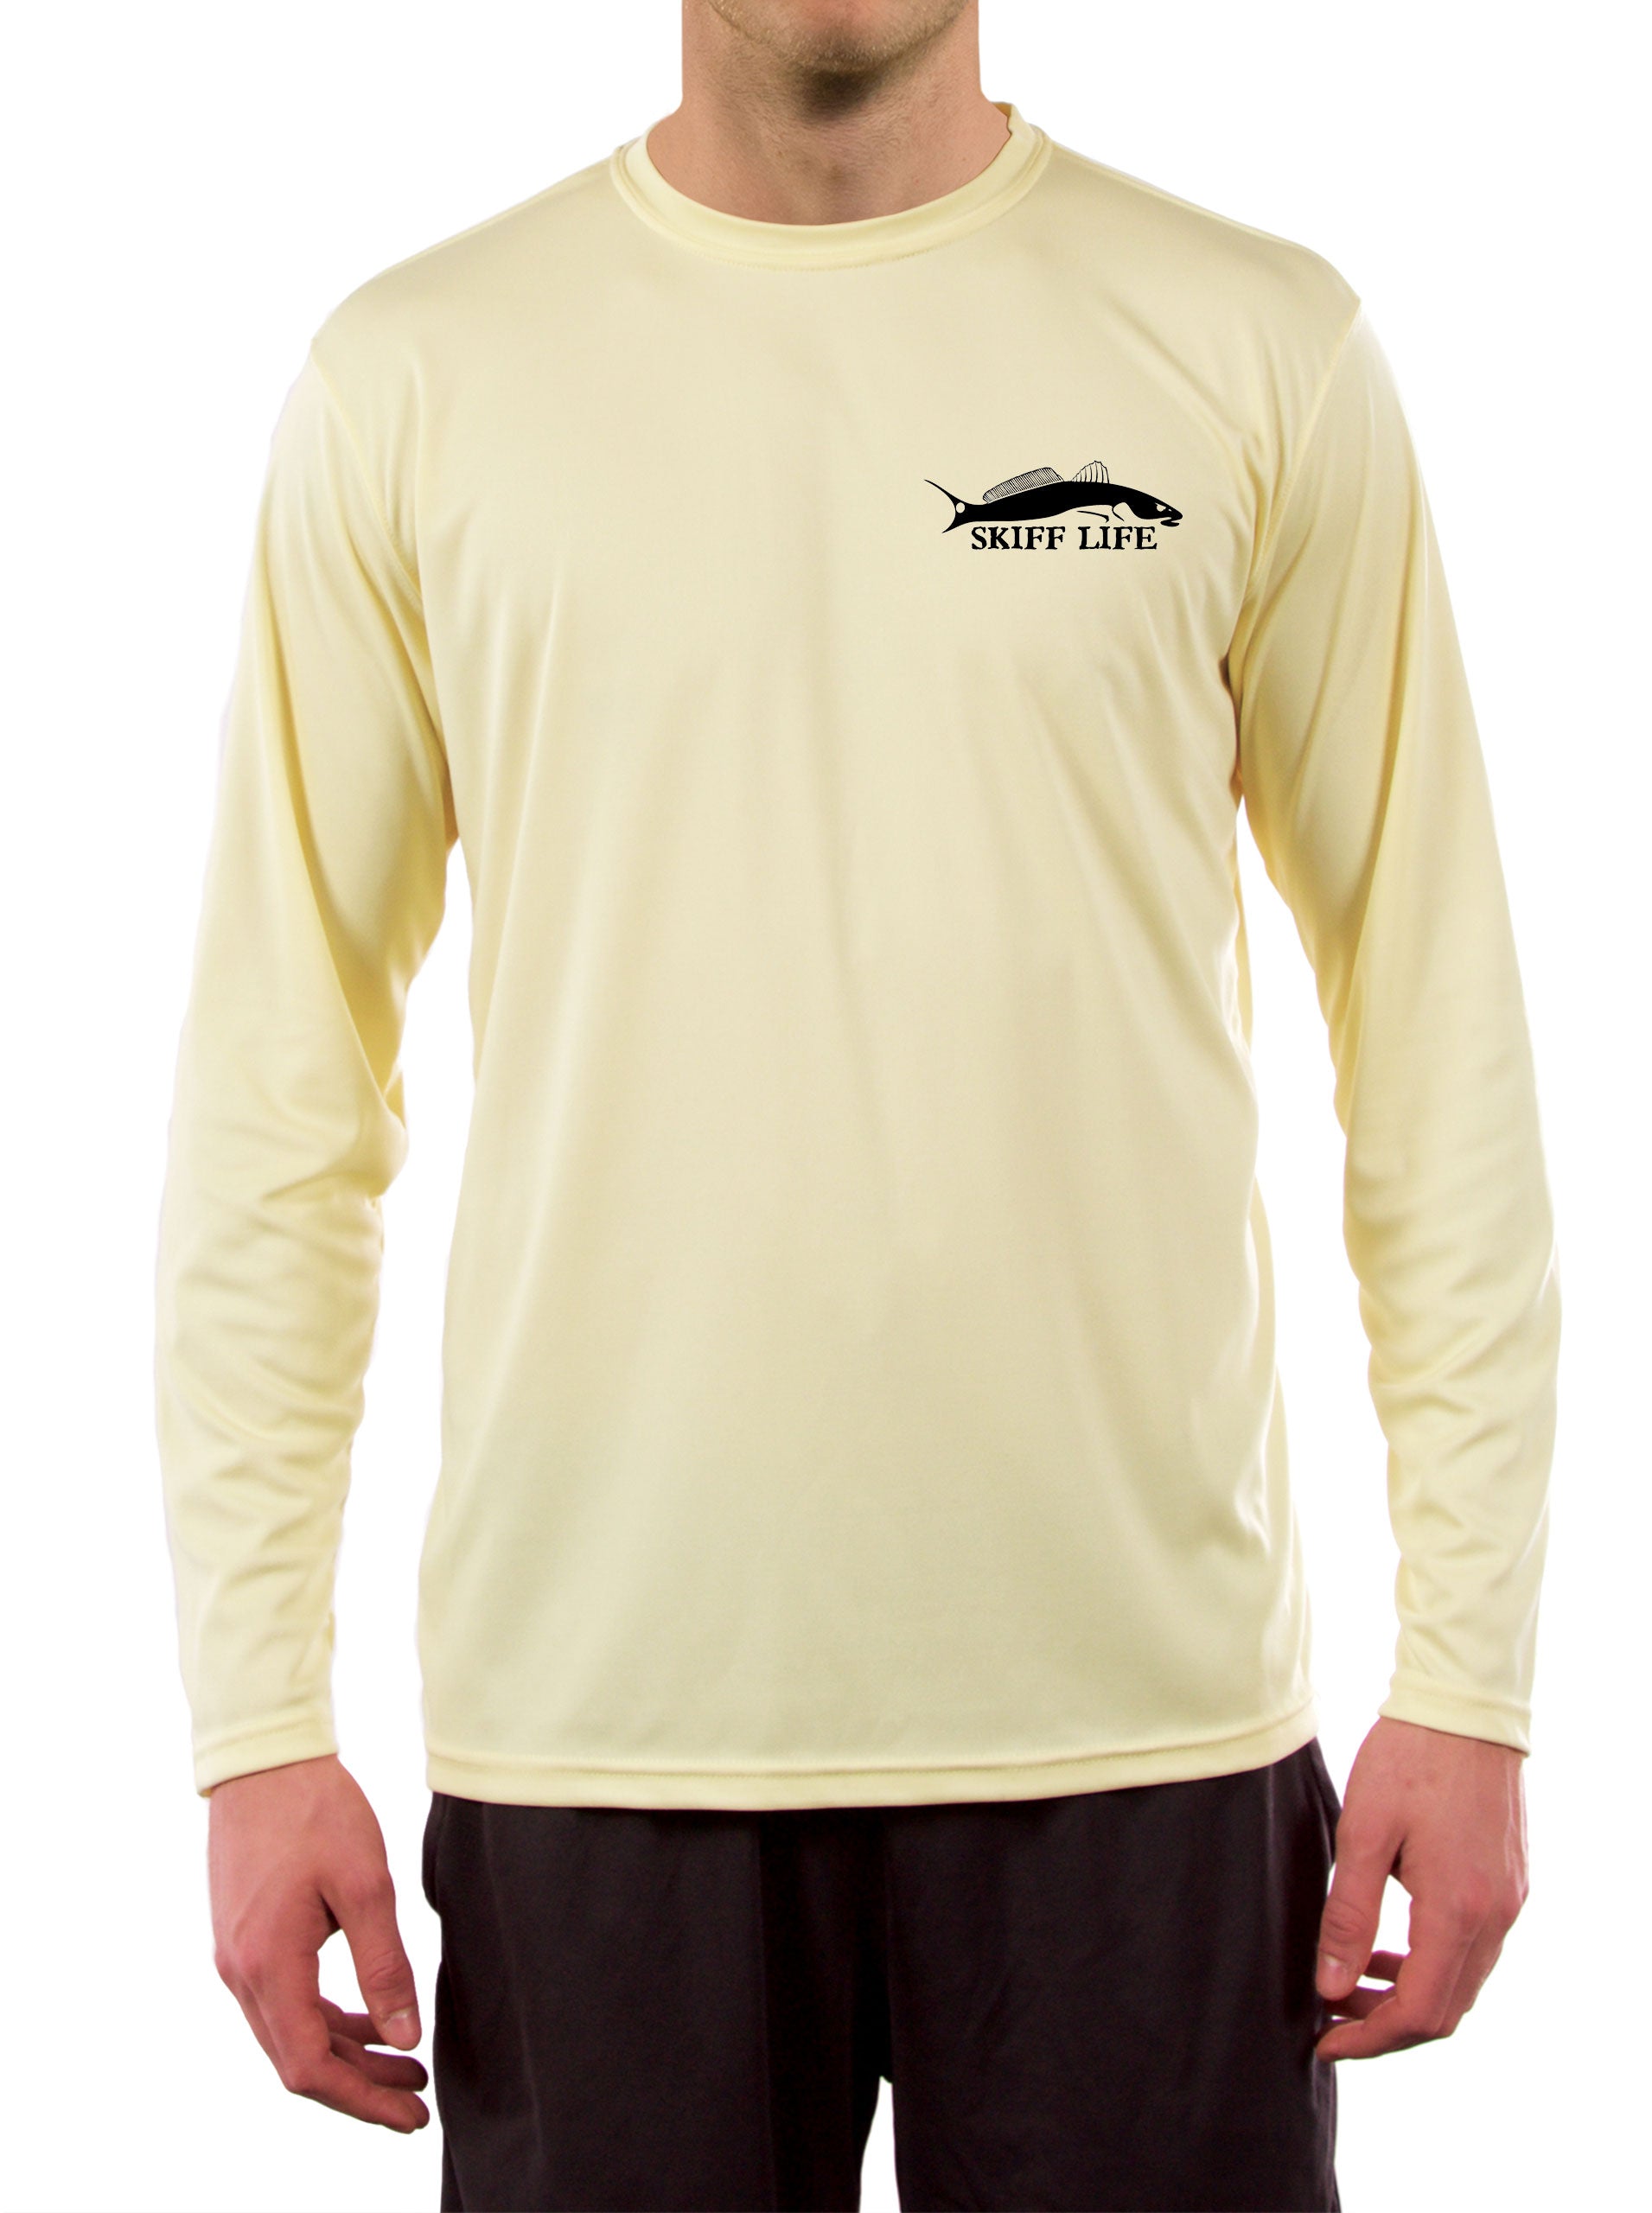 Stunshow UPF 50 Men's Long Sleeve Fishing Shirt Size XL